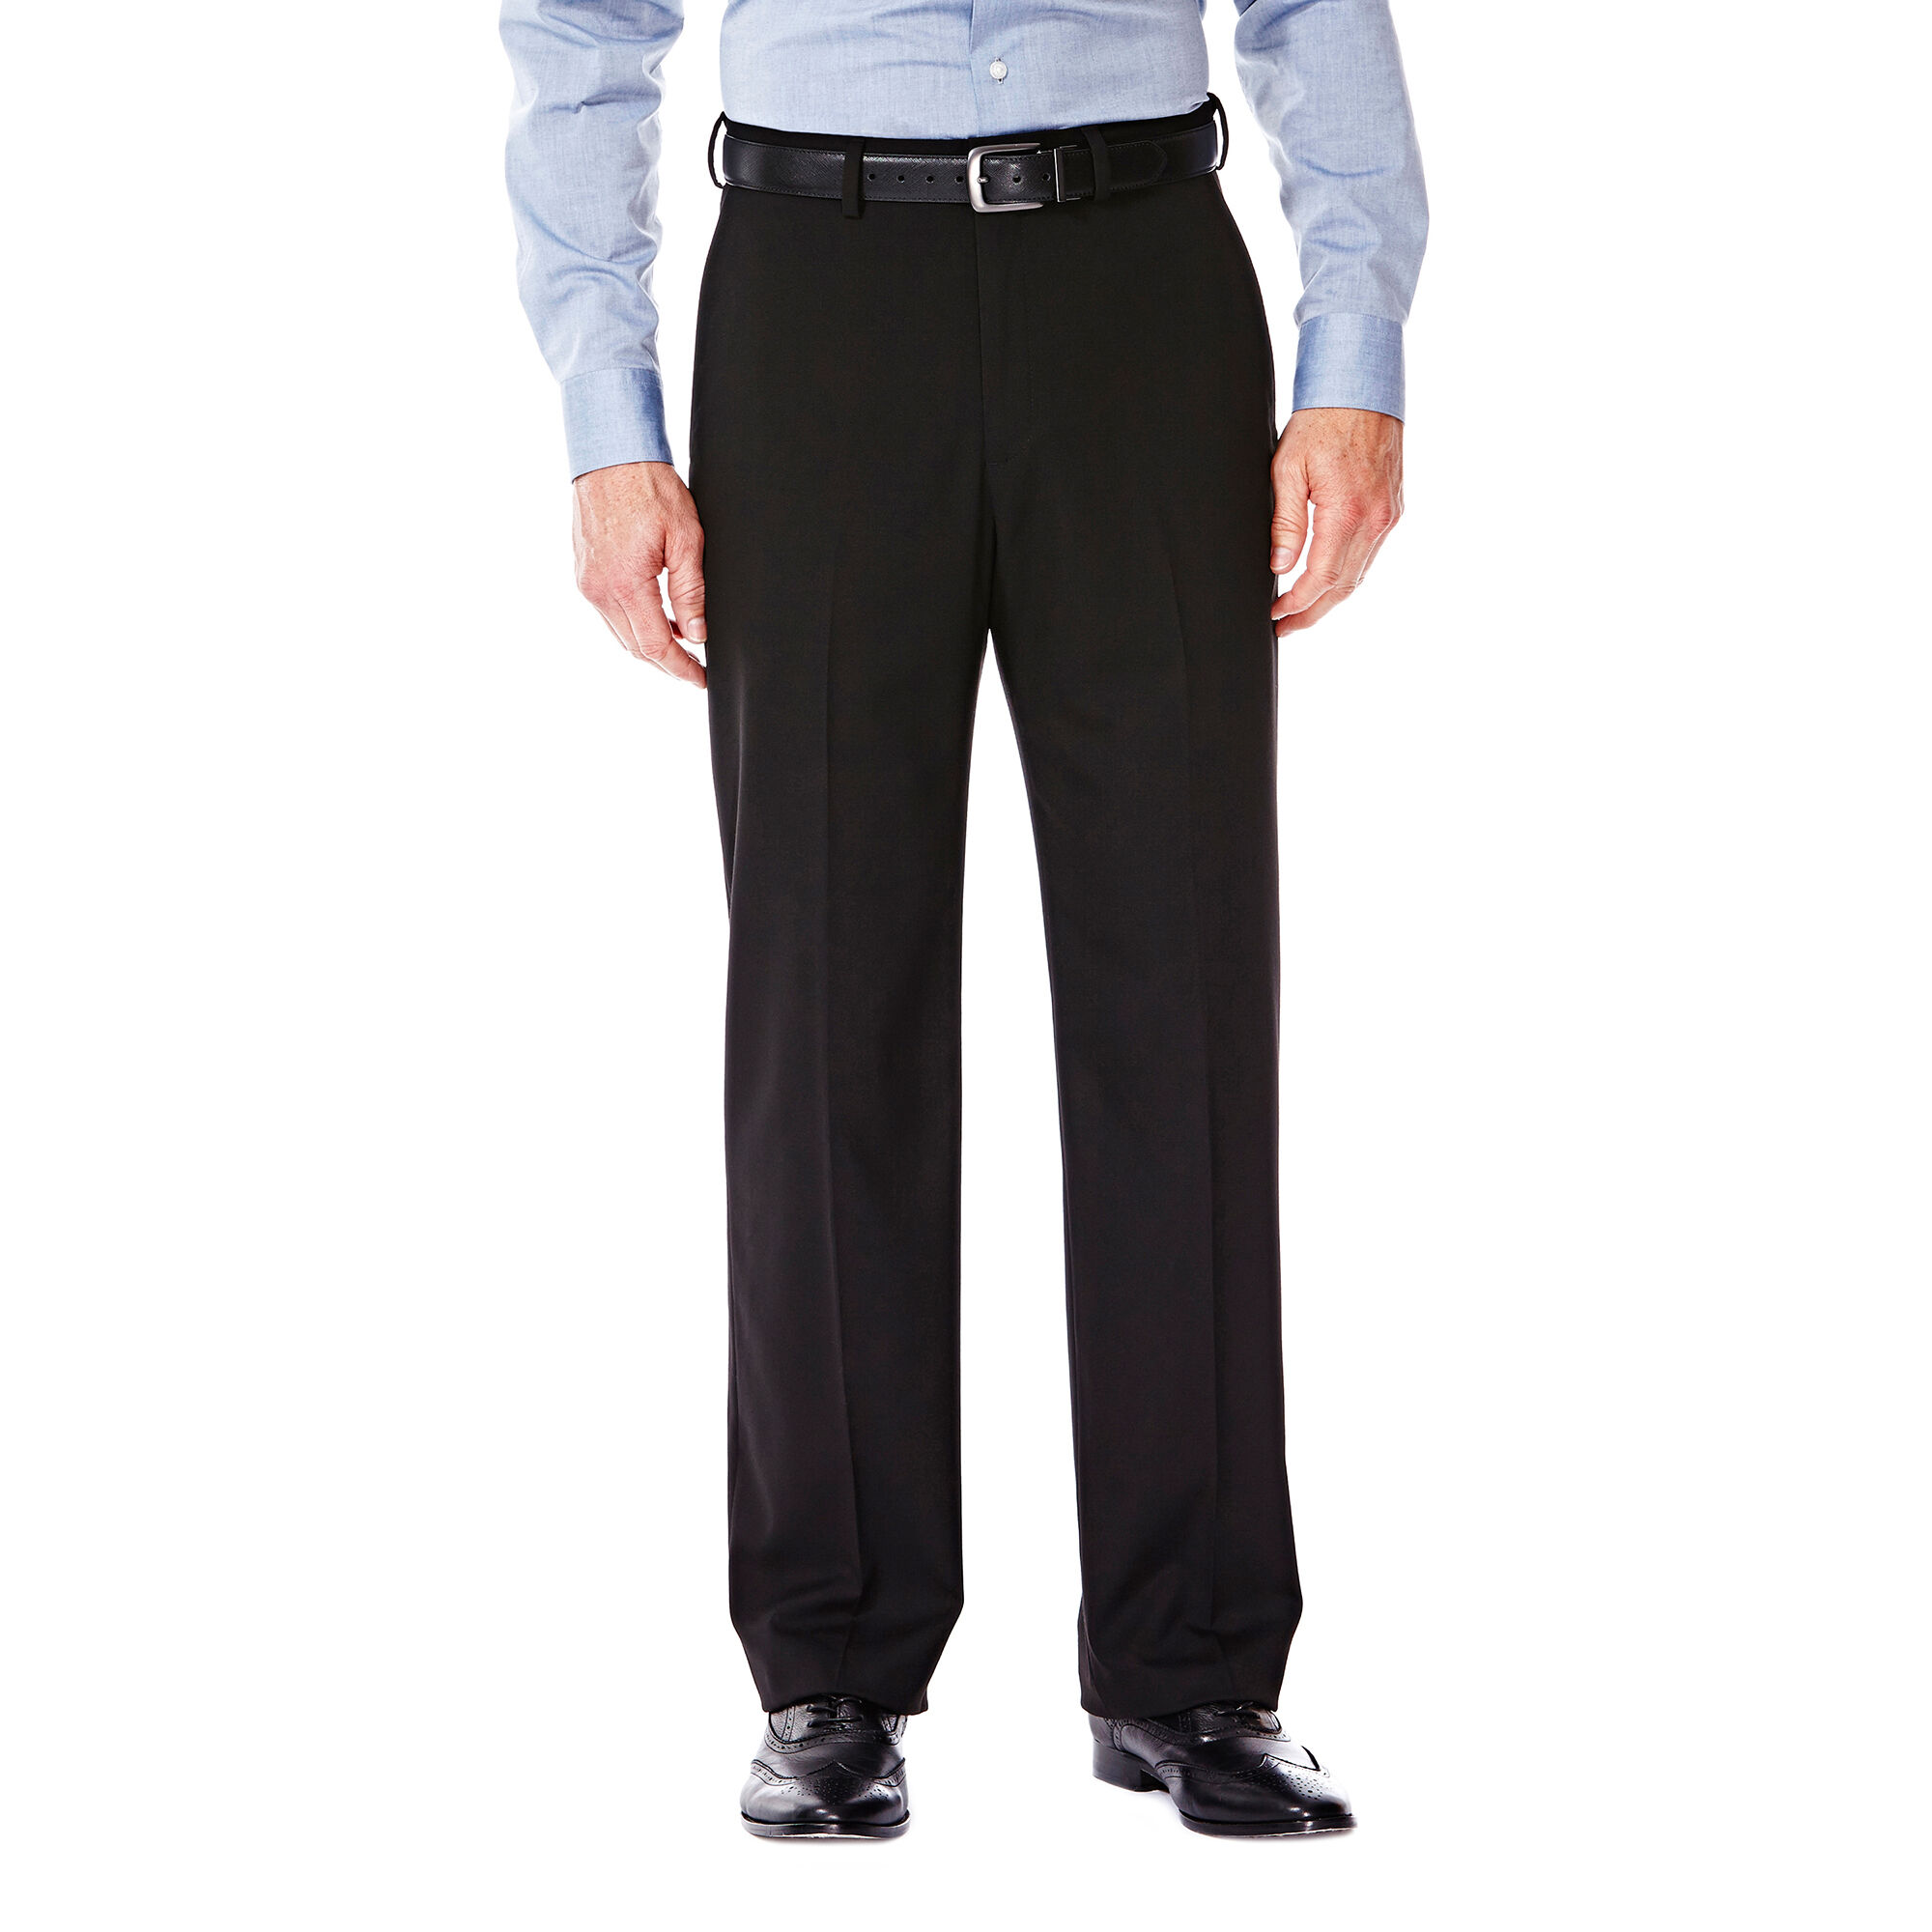 J.M Haggar Men's Solid Gab 4-Way Stretch Slim Fit Suit Separate Pant 